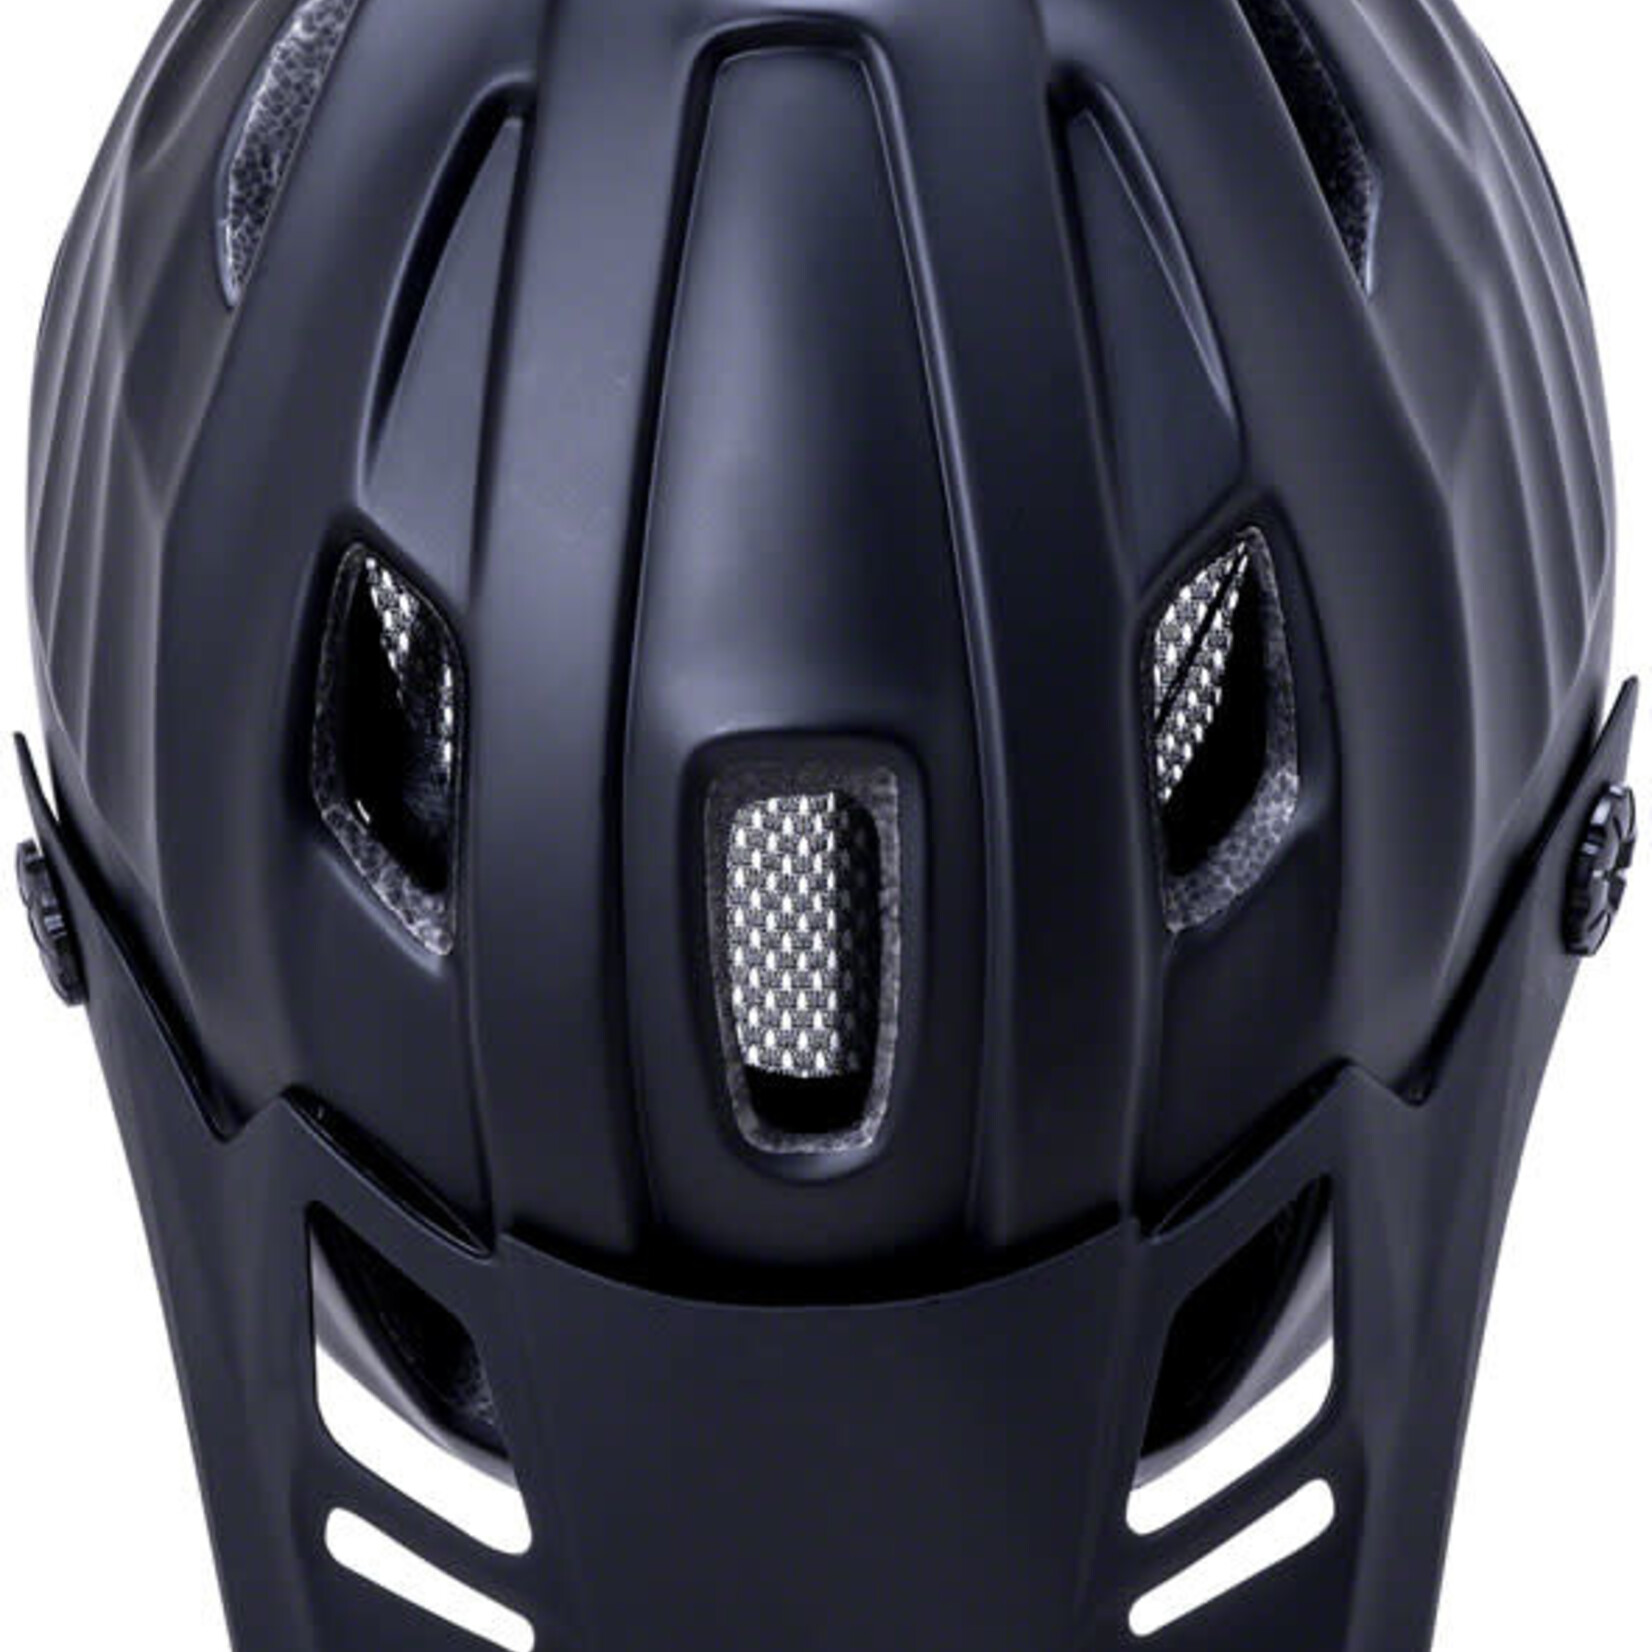 Kali Protectives Kali Maya 2.0 Solid Helmet: Matte Black LG/XL